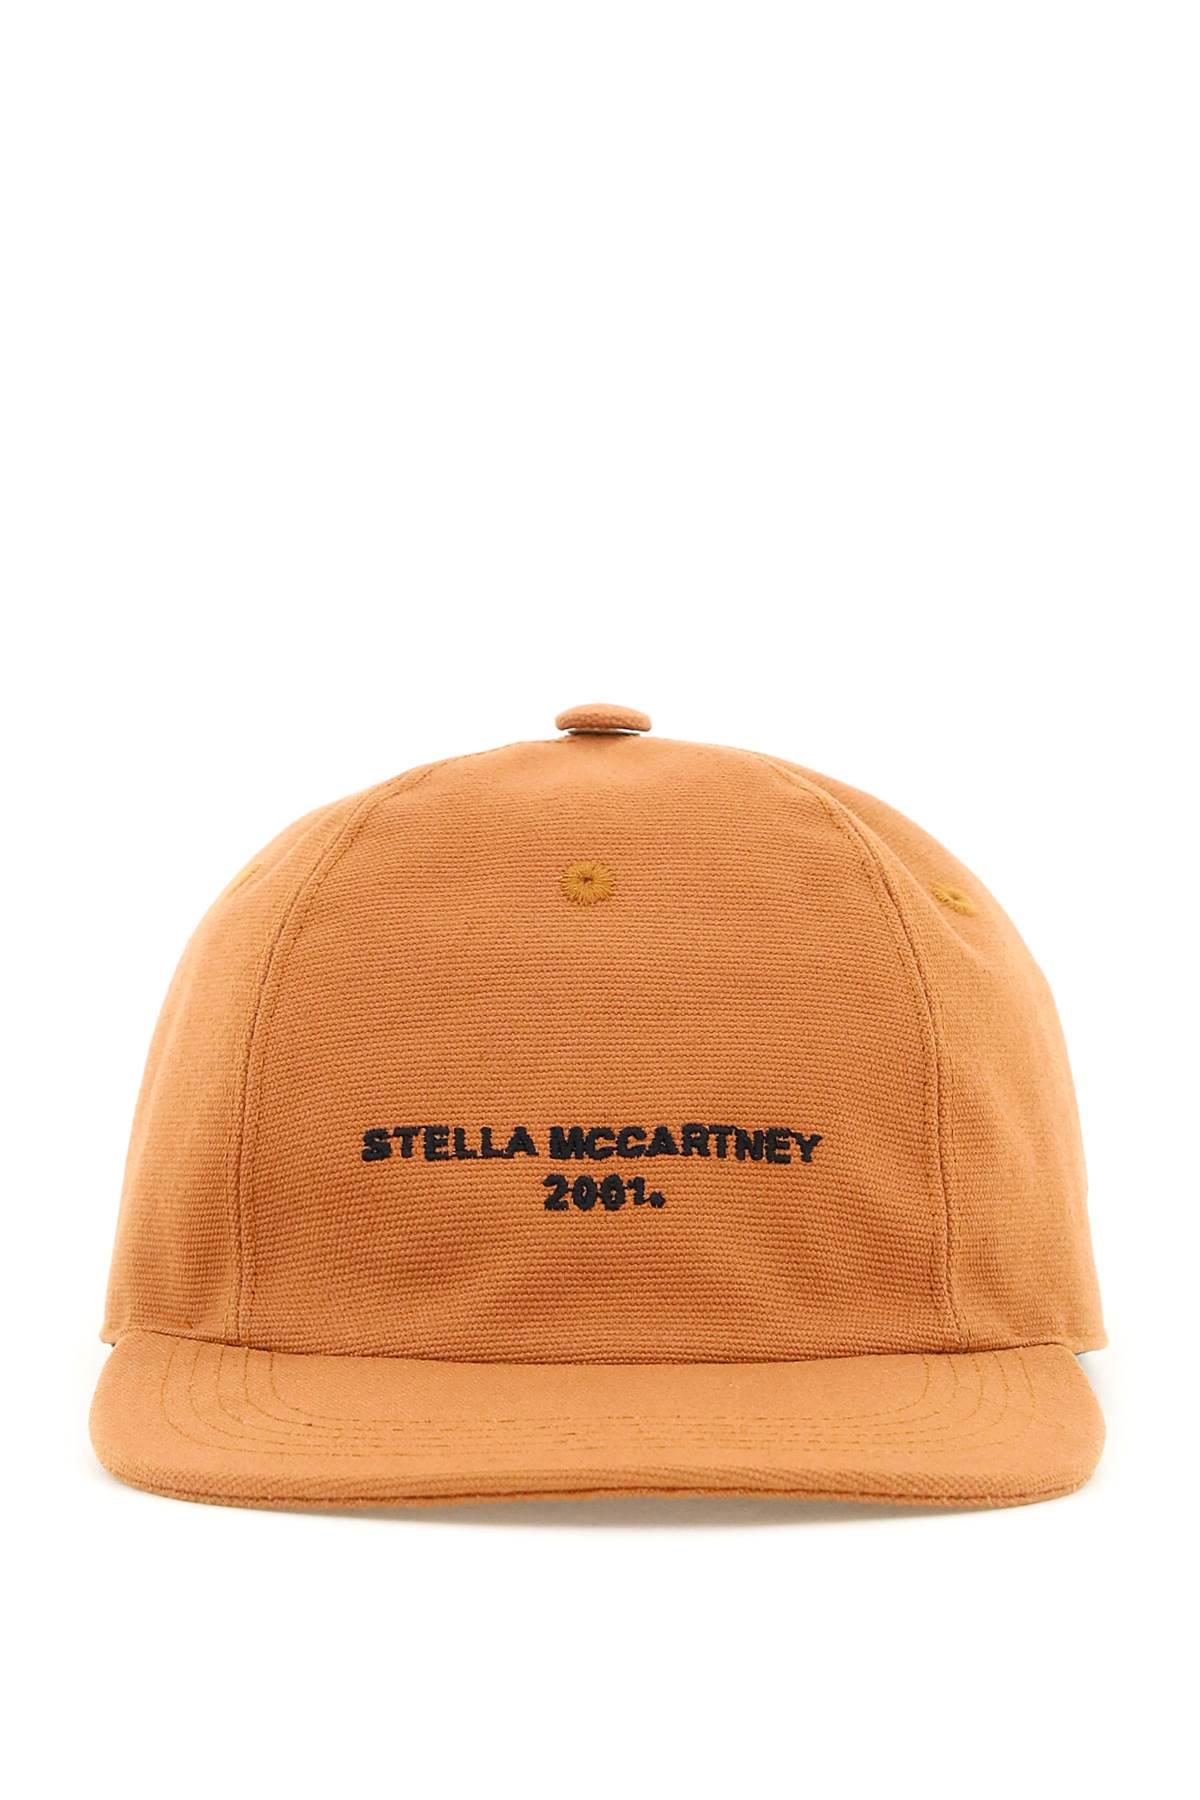 STELLA Mc CARTNEY LOGO BASEBALL CAP